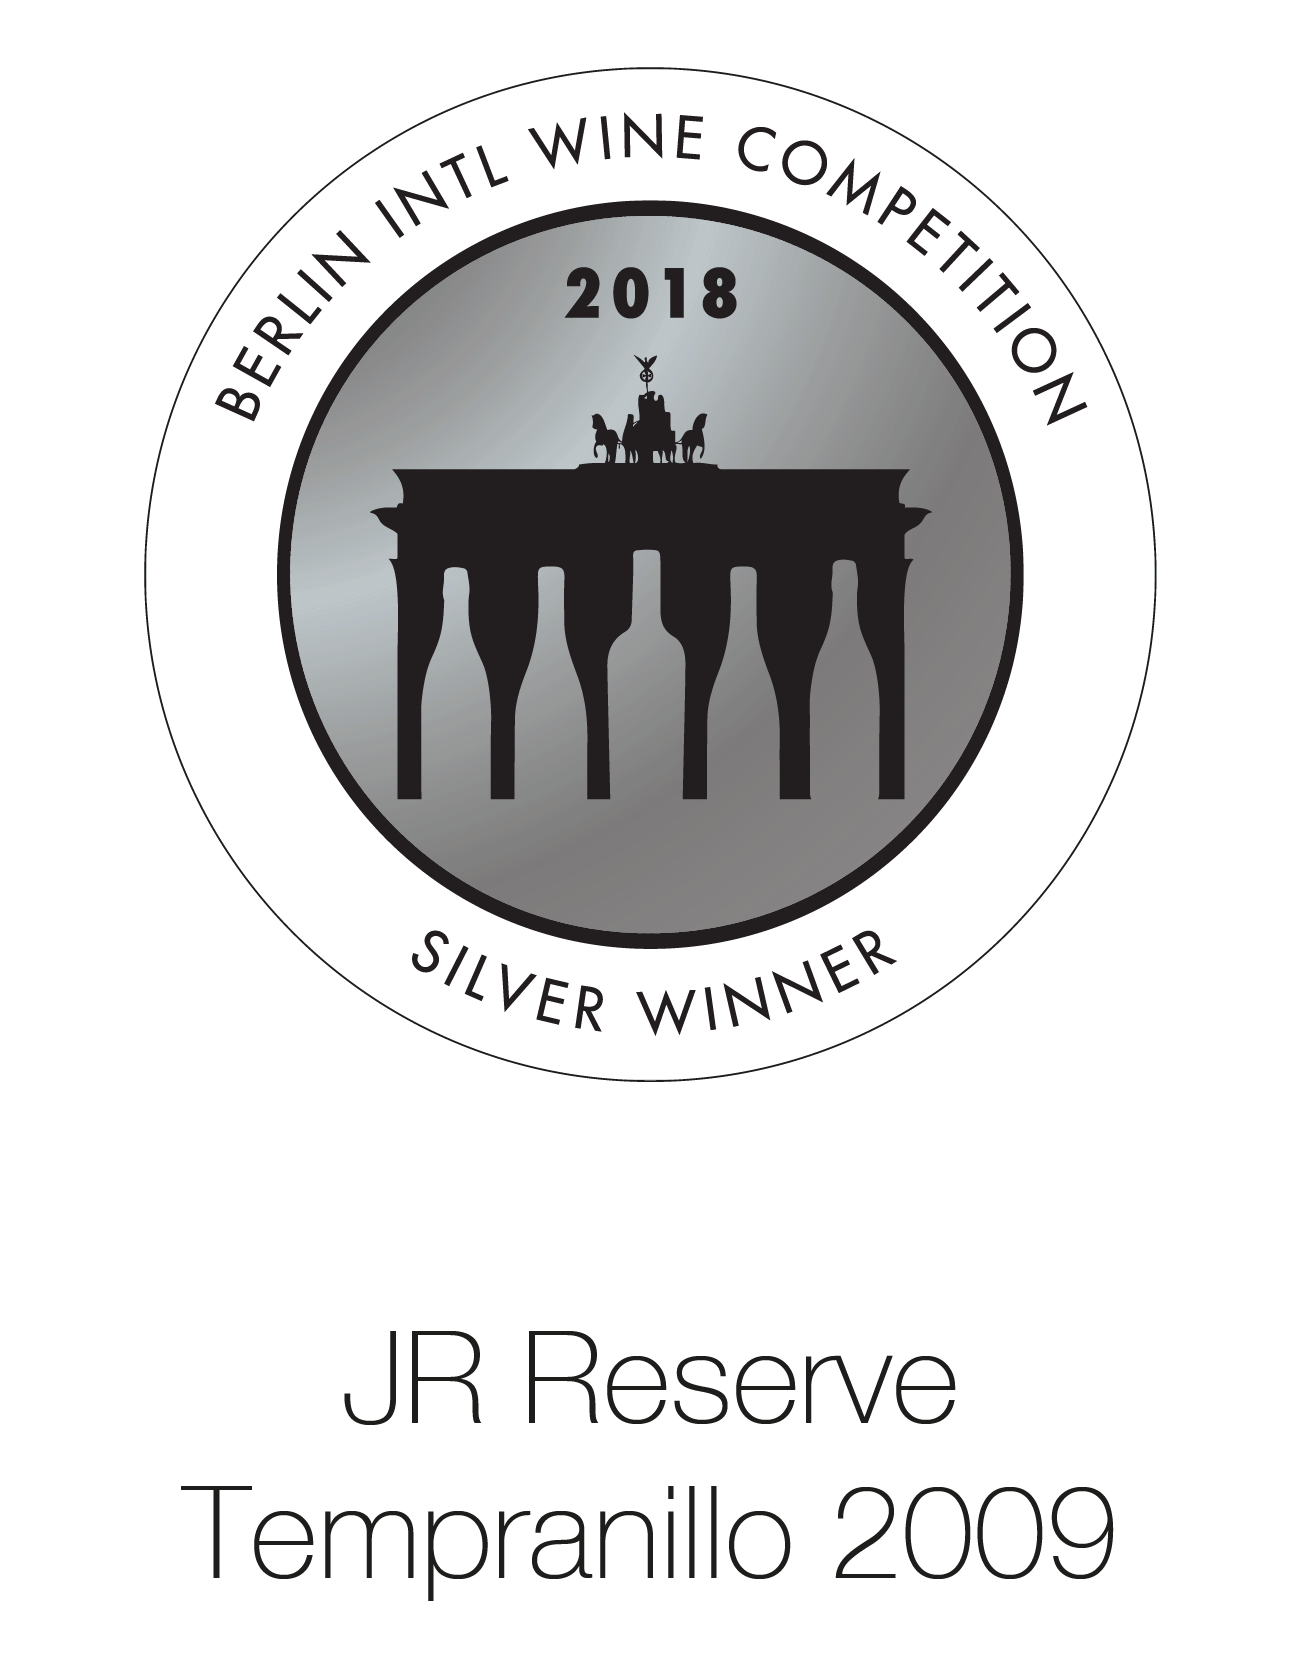 JR Reserve - Tempranillo 2009 - Berlin International Wine Competition 2018